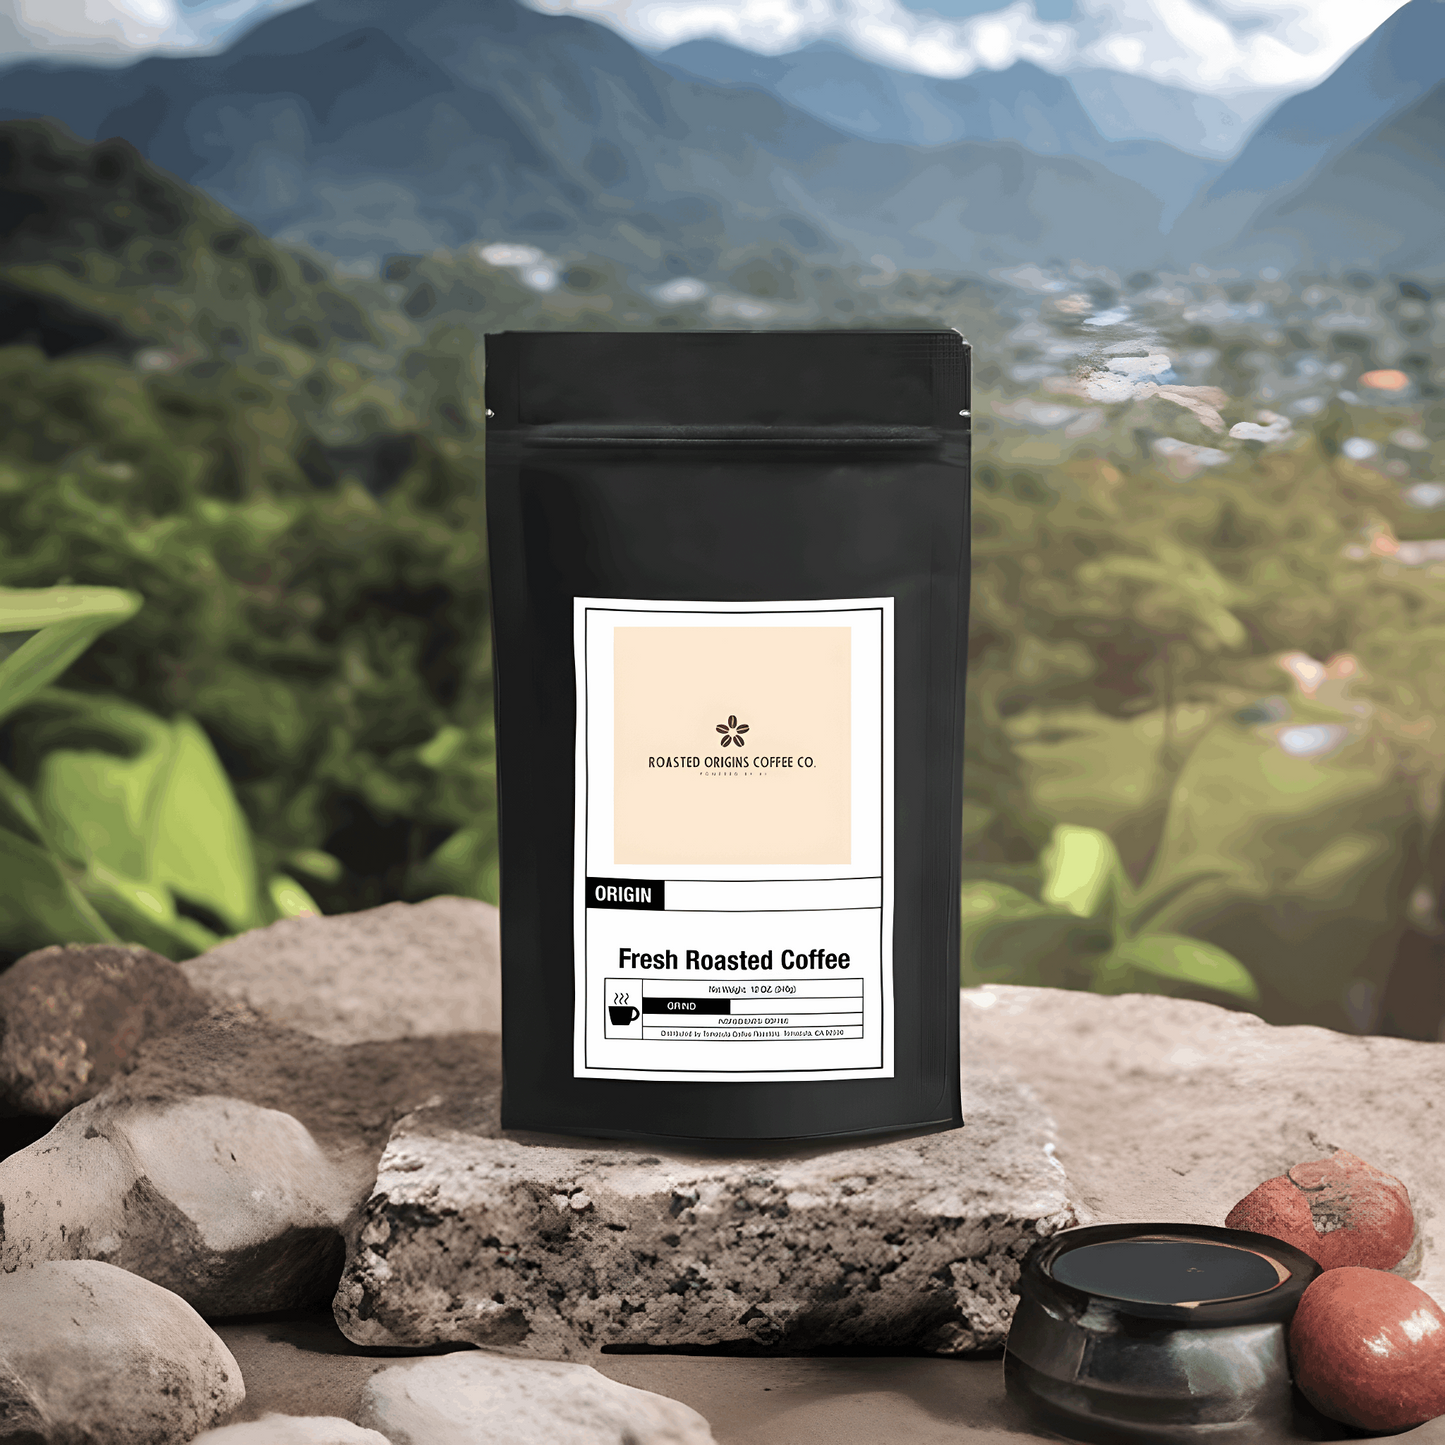 a bag of Honduras single origin coffee from company called roasted origins on a rock pedestal